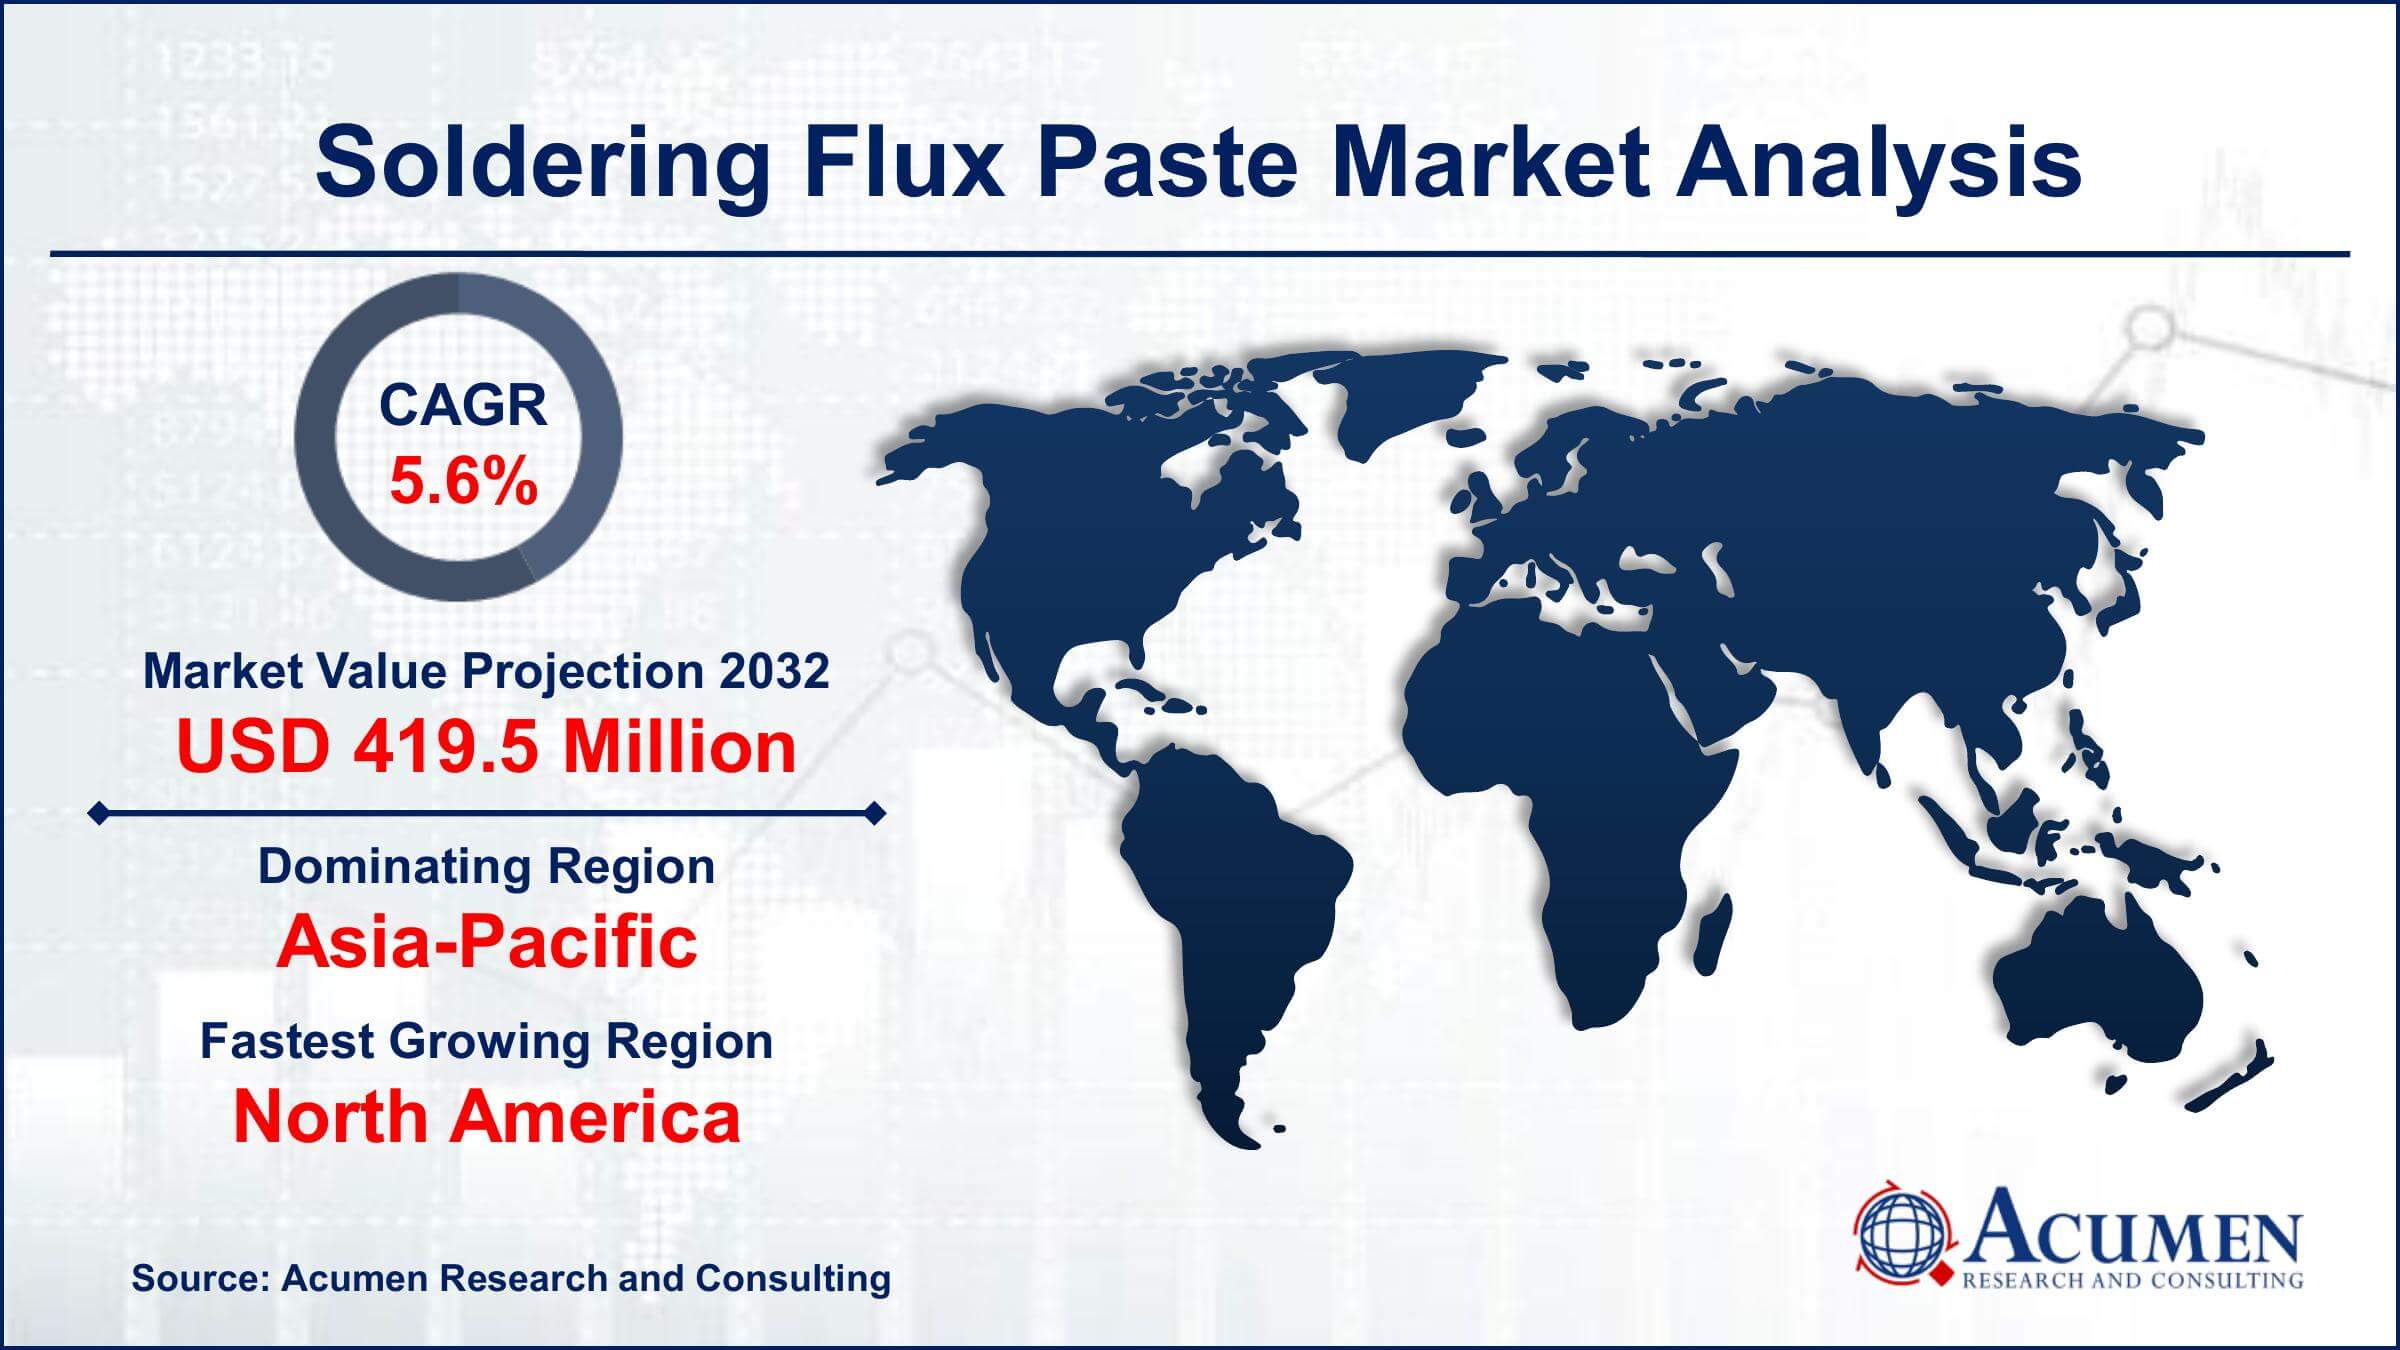 Global Soldering Flux Paste Market Trends